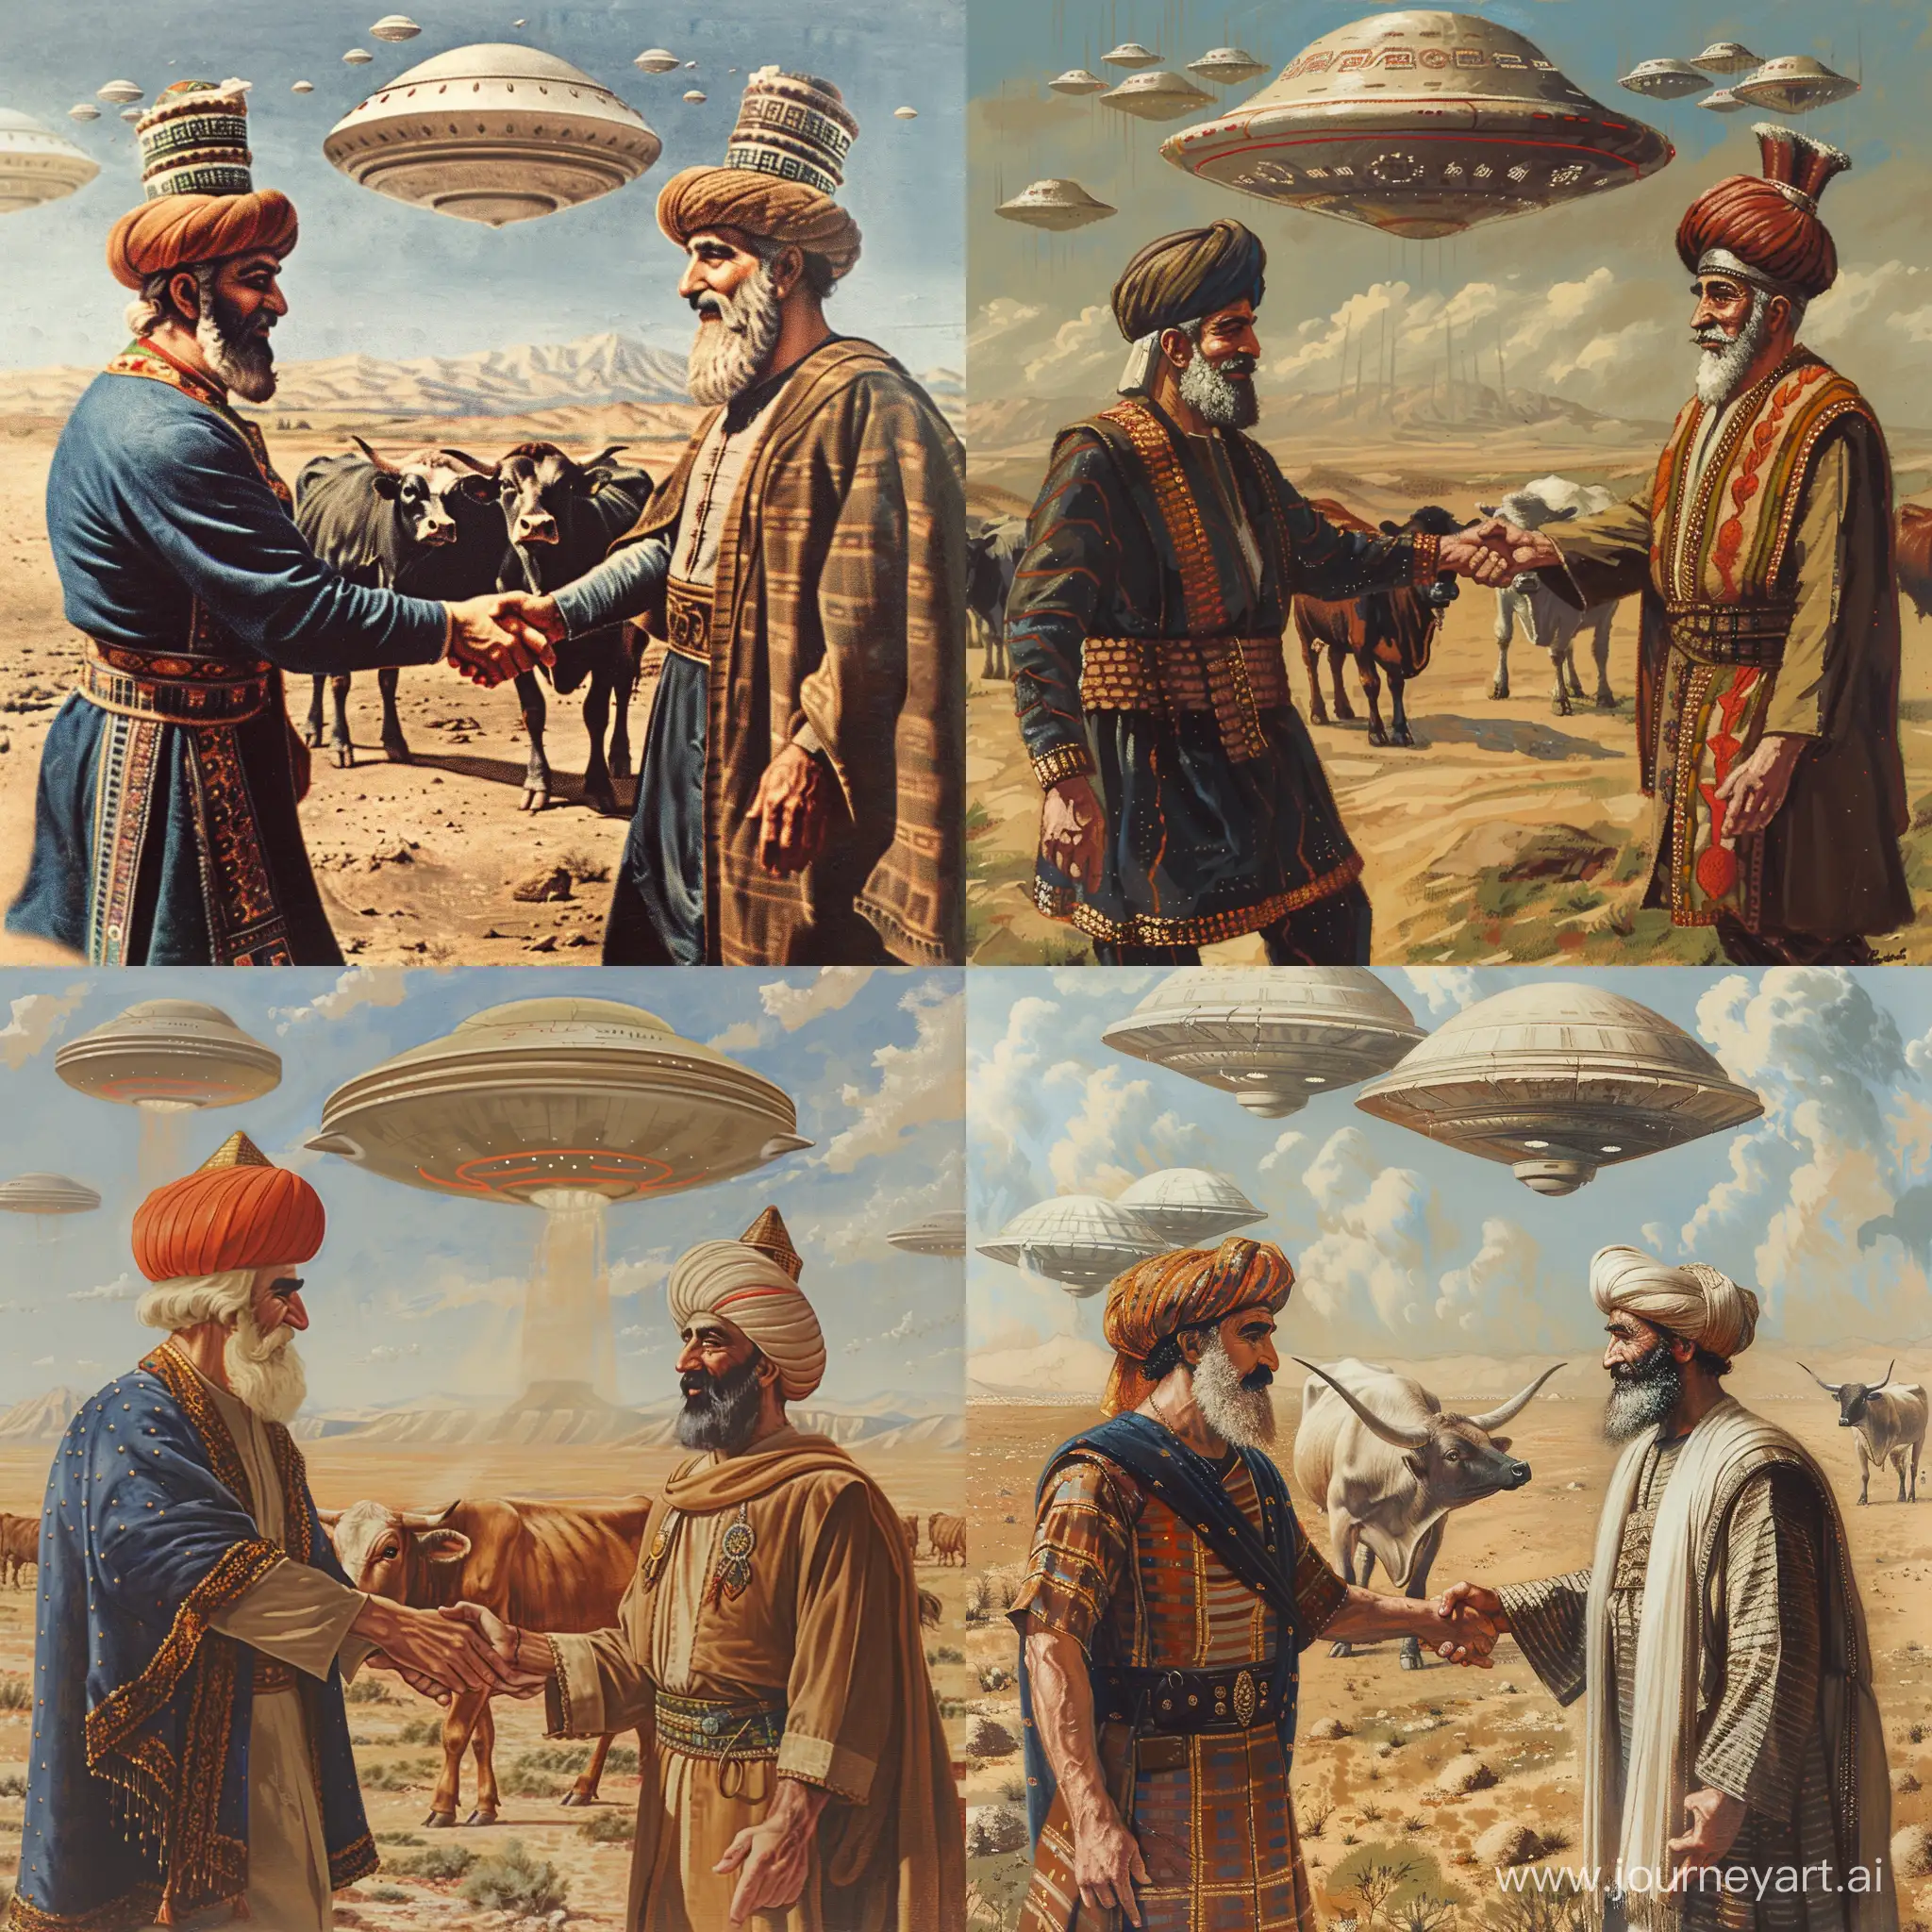 Cyrus-the-Great-and-Nader-Shah-Afshars-Historic-Handshake-Amidst-UFO-Invasion-in-Lofi-Desert